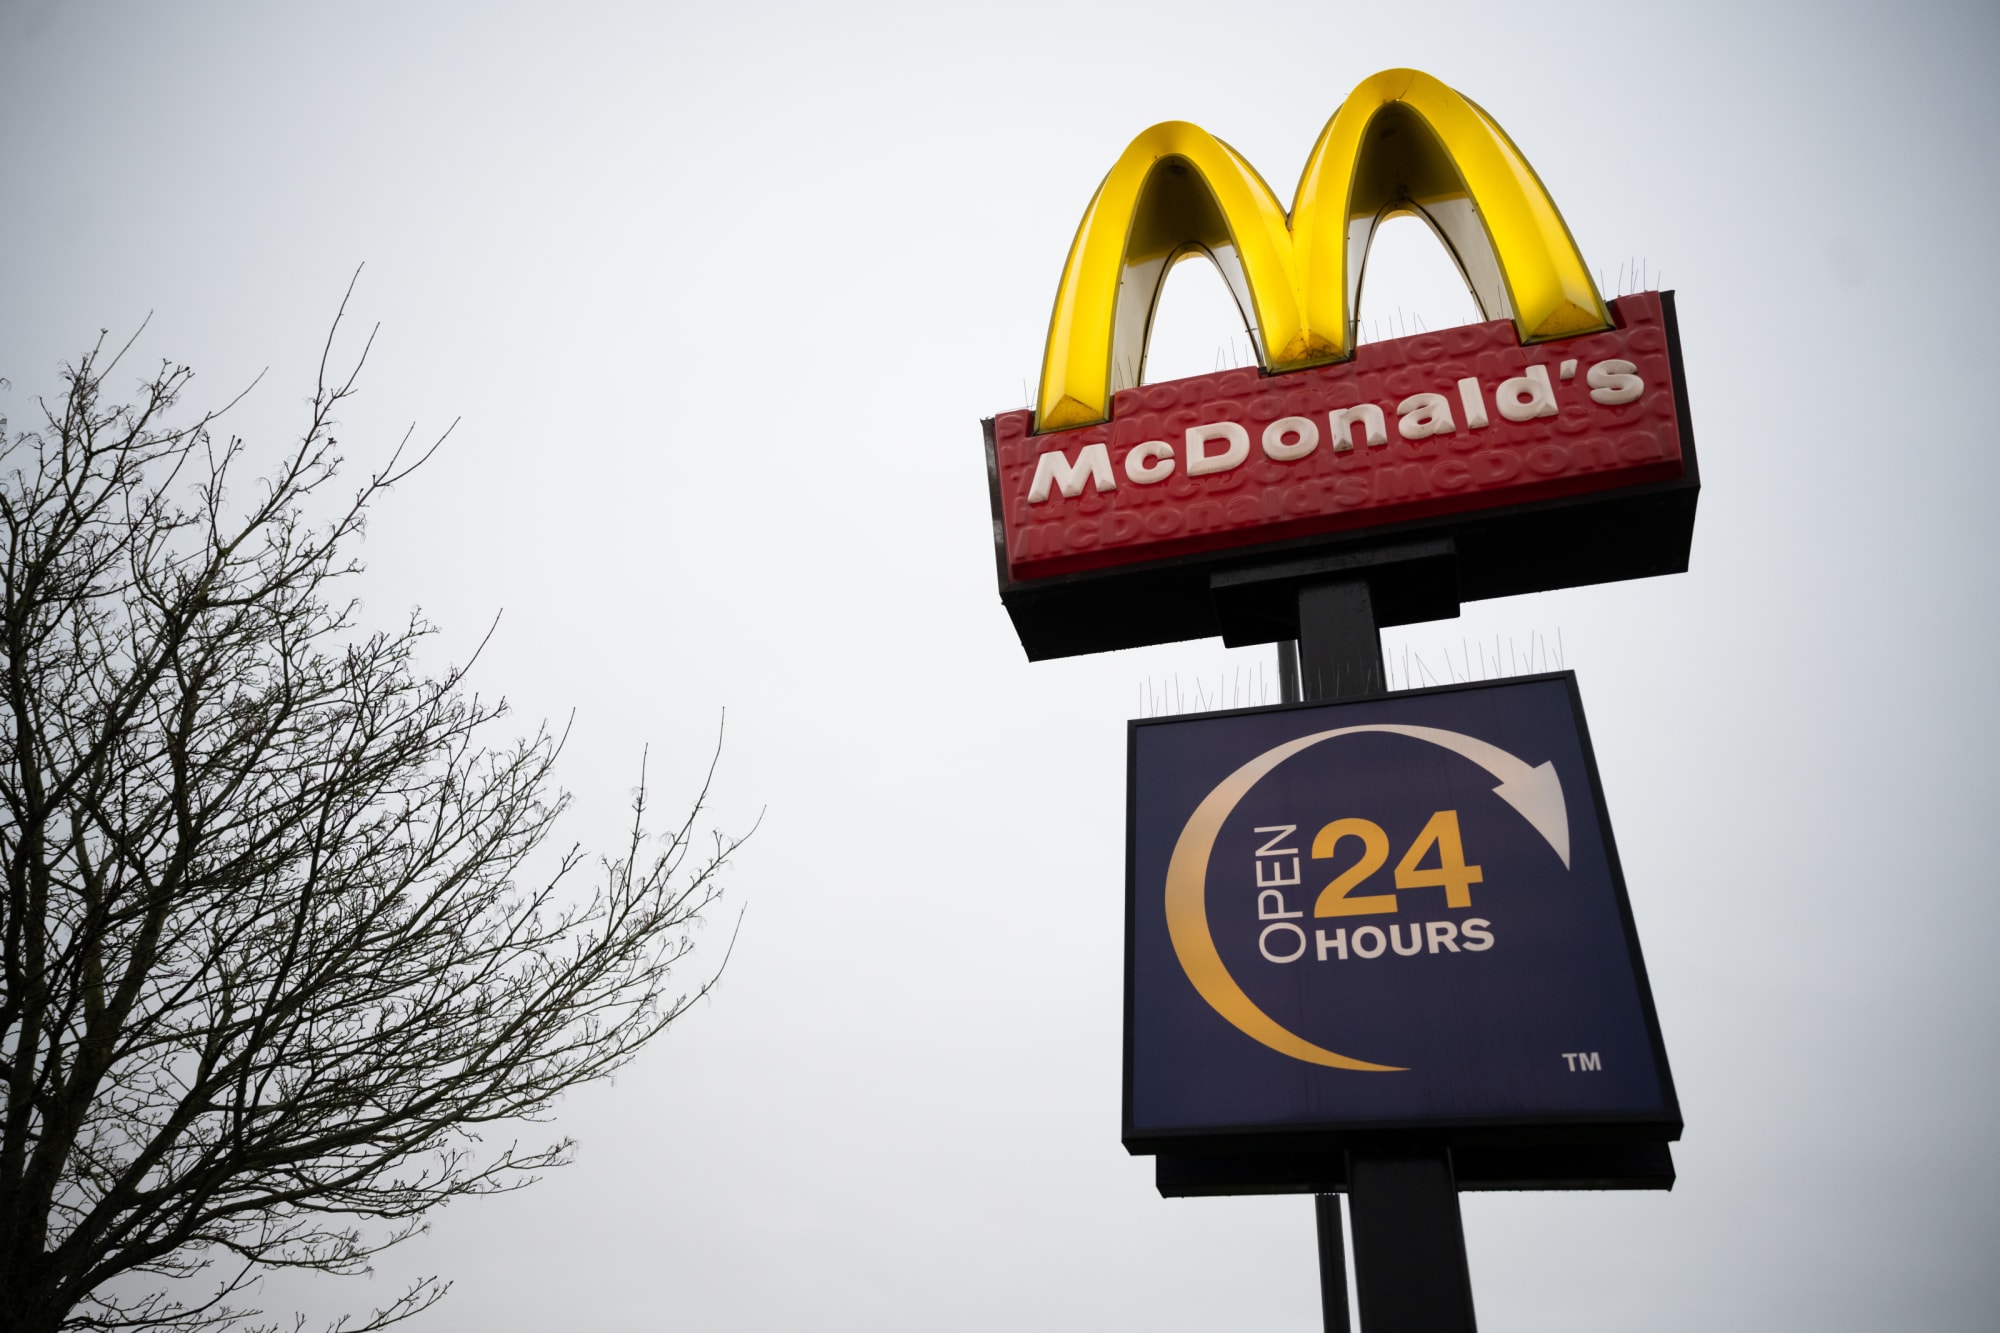 Are McDonald's restaurants open on Christmas Eve 2020?